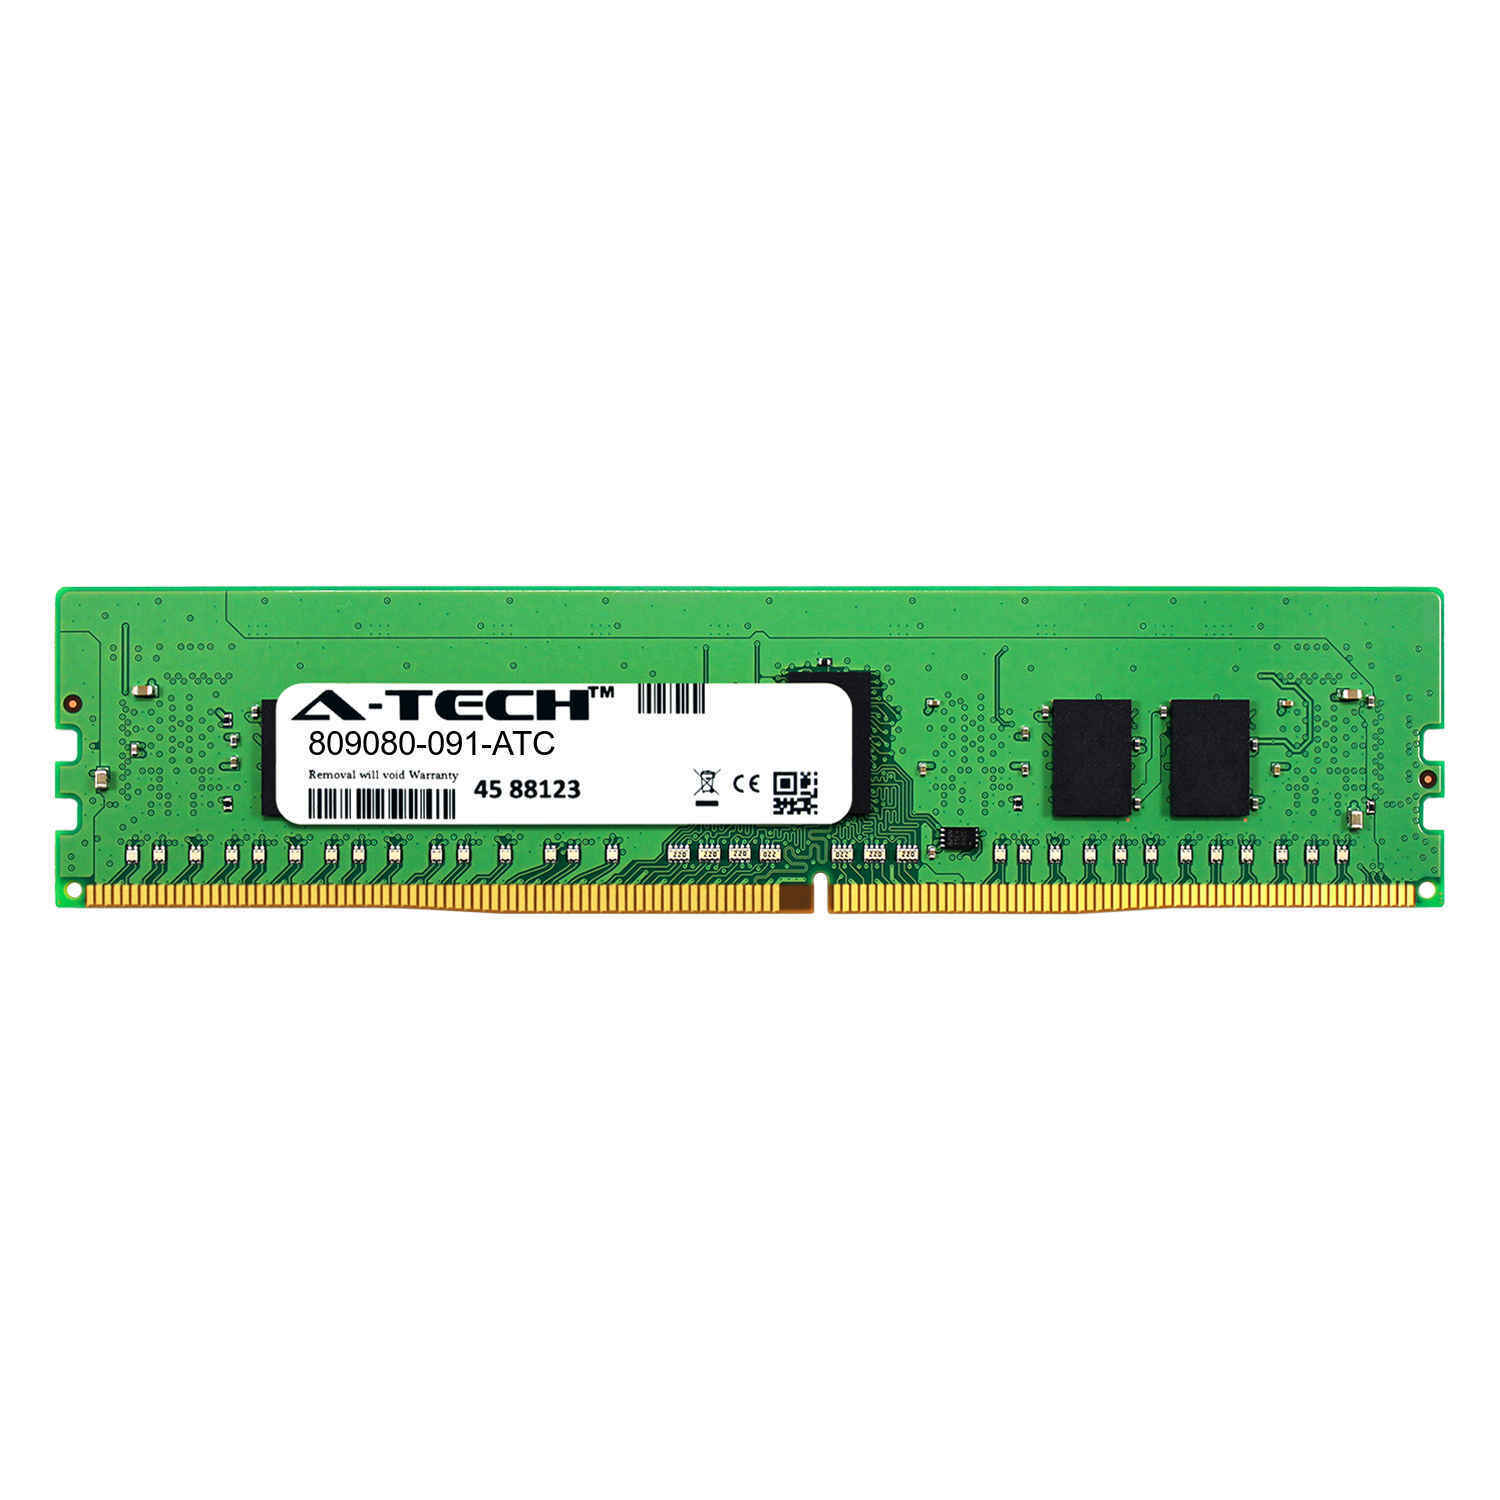 8GB DDR4 2400MHz PC4-19200R RDIMM (HP 809080-091 Equivalent) Server Memory RAM